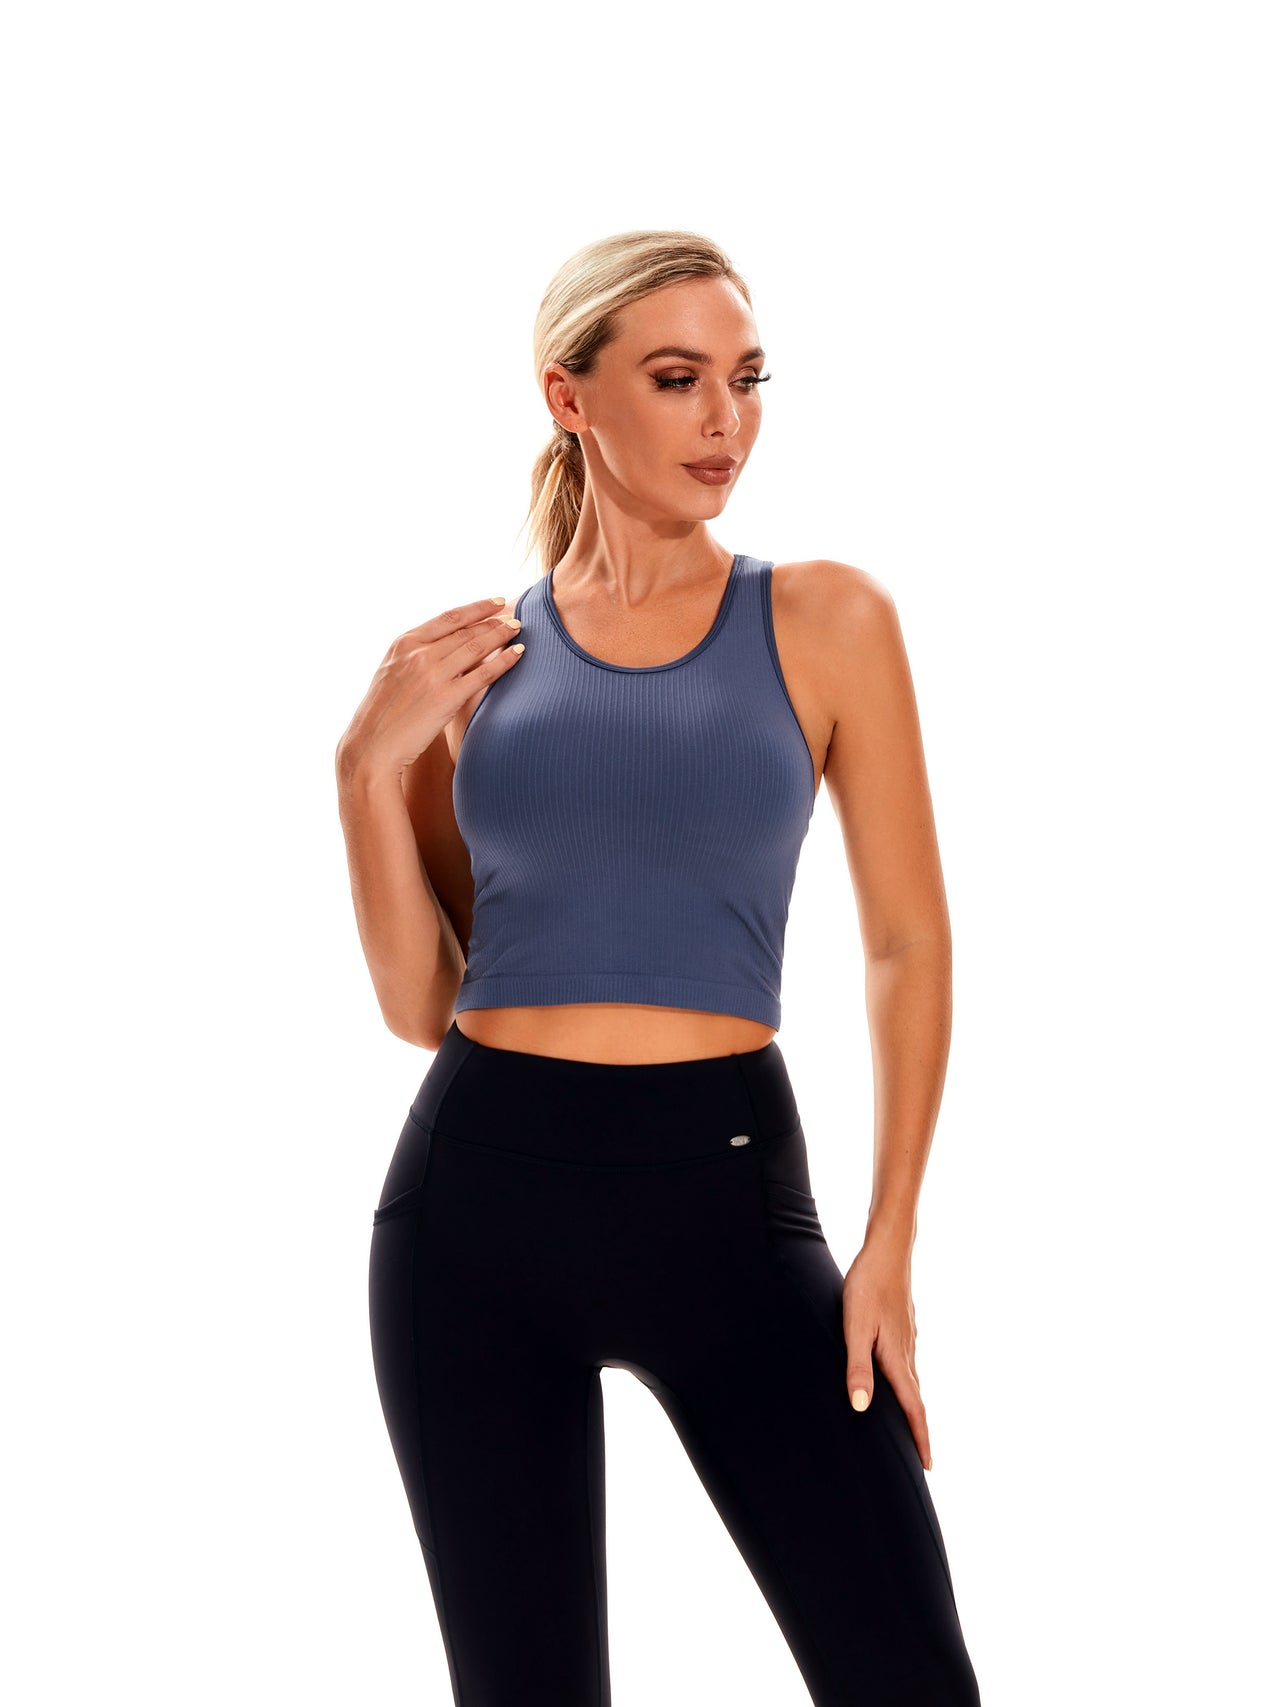 Women's Activewear Set 3d Set Workout Sets 2 Piece Floral Clothing Suit  Black White Spandex Yoga Fitness Tennis Moisture Wicking Sport Activewear  High